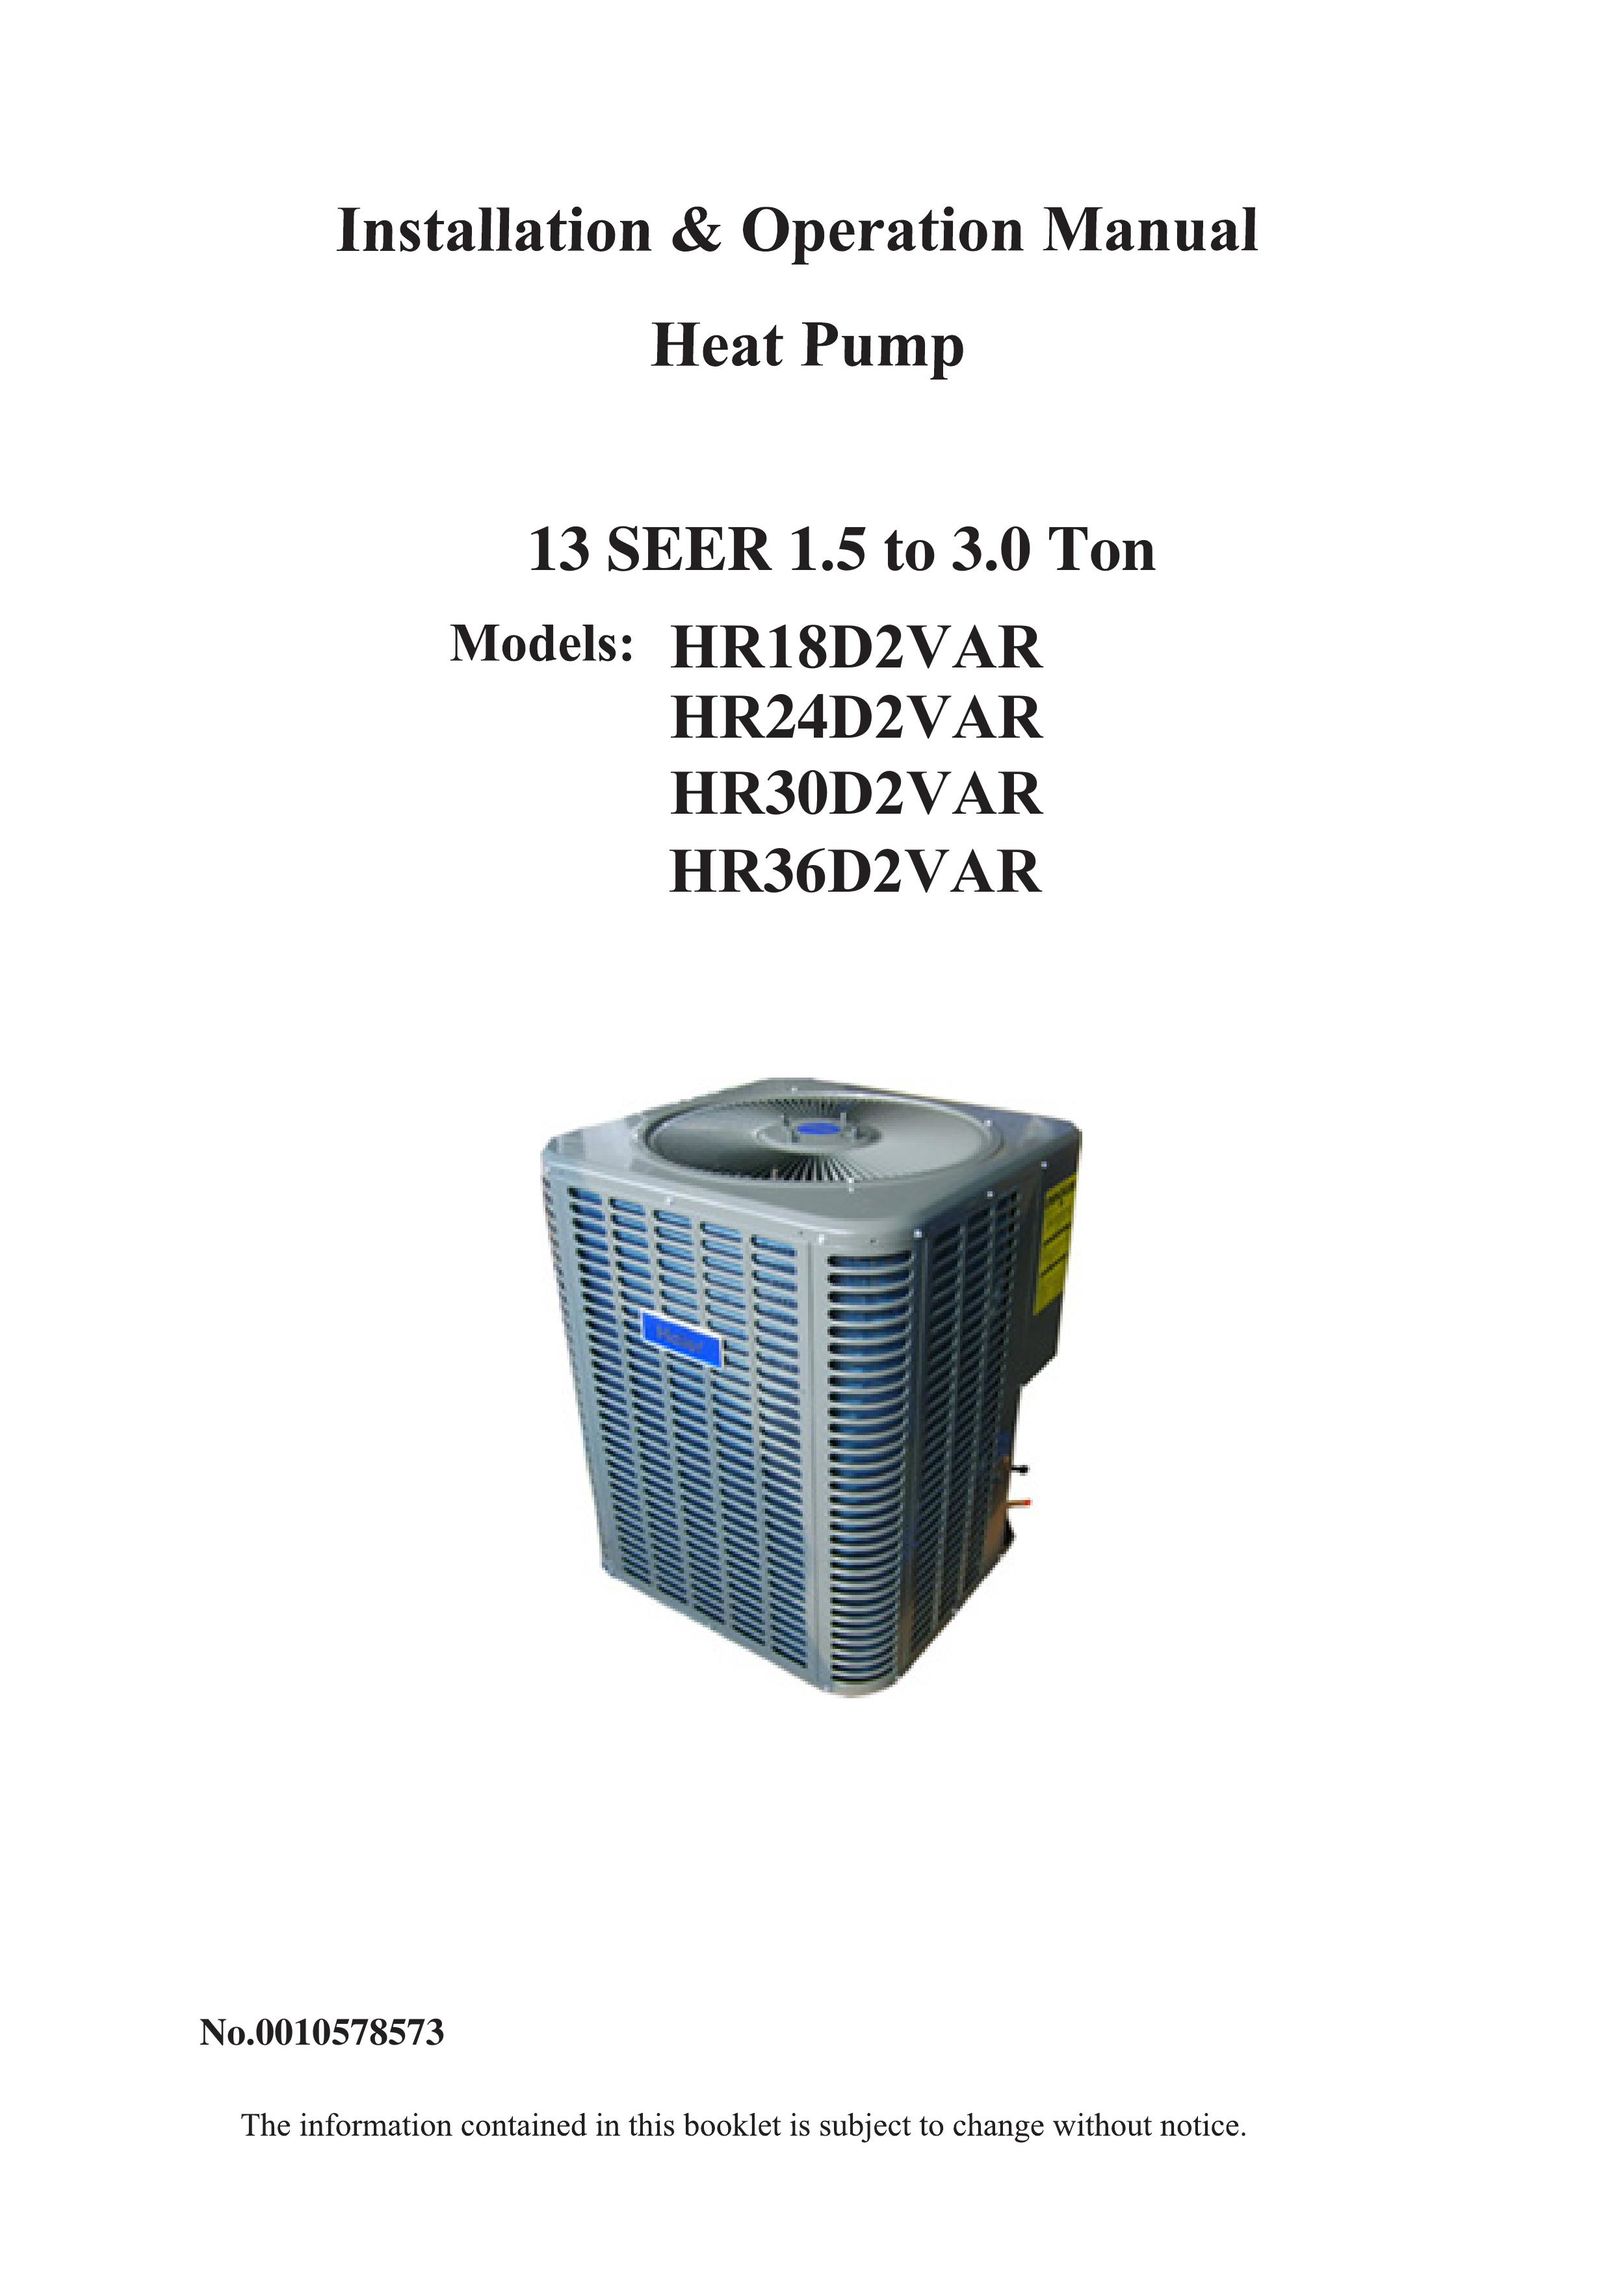 Haier HR36D2VAR Heat Pump User Manual